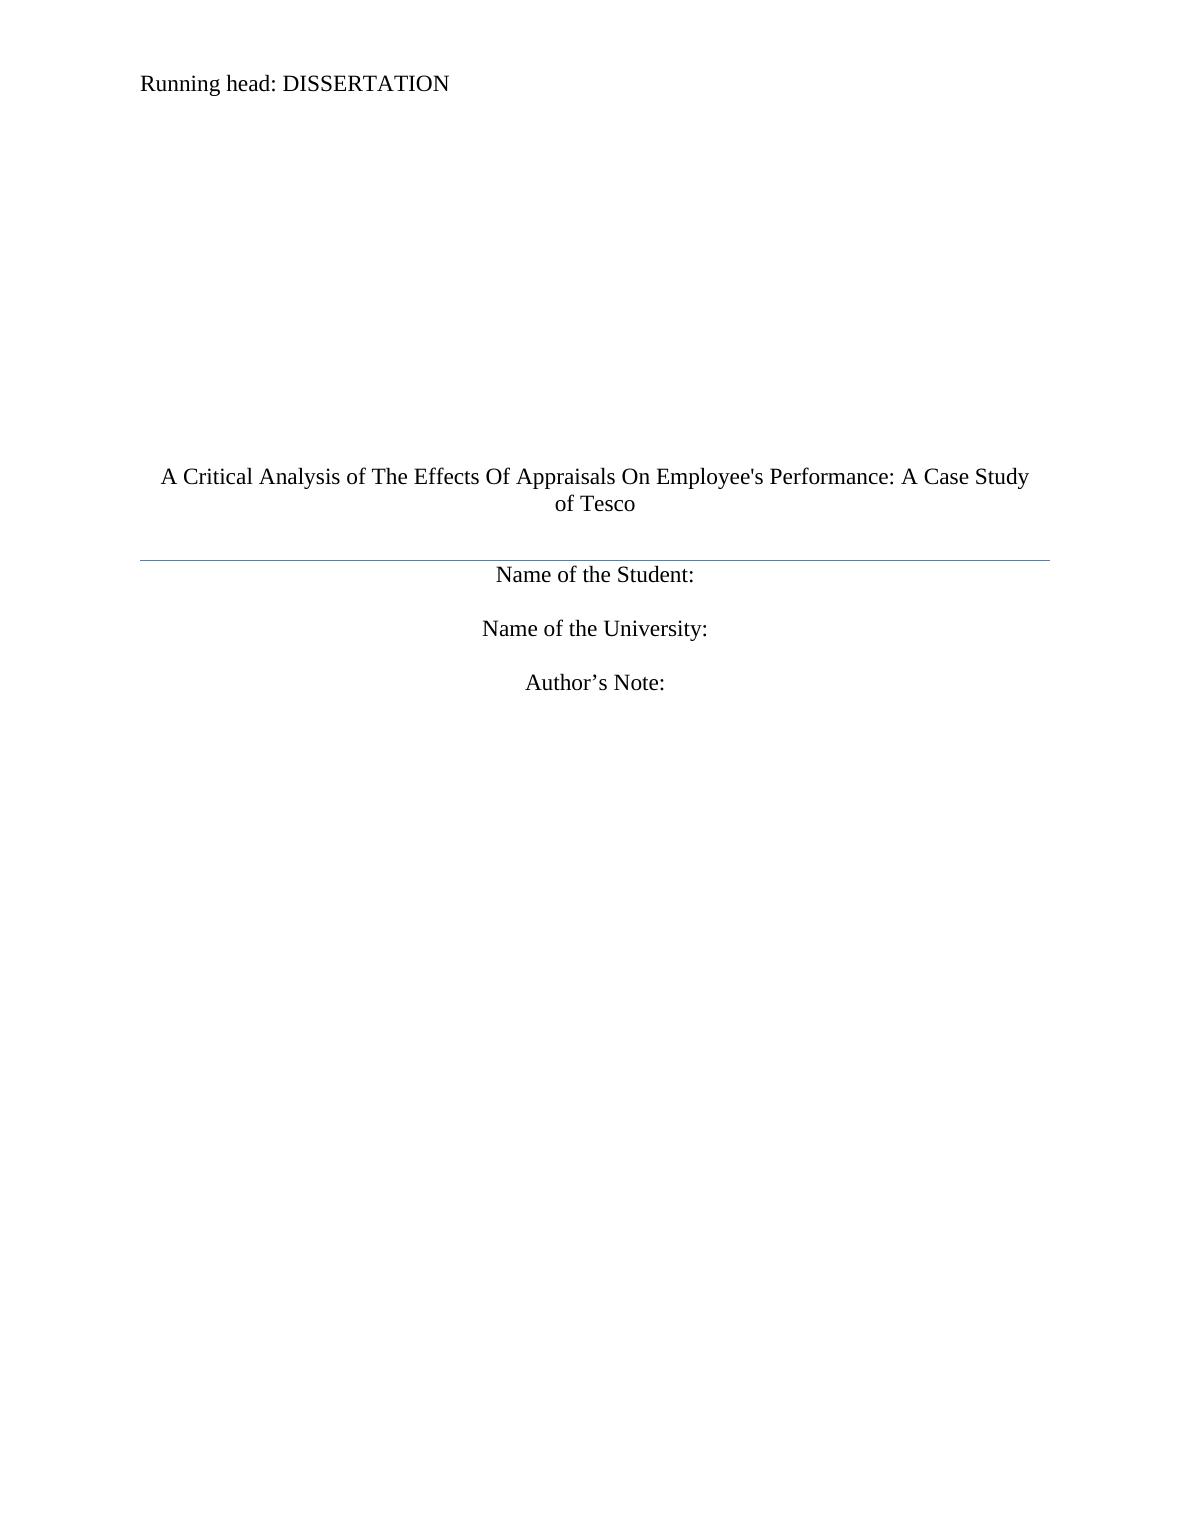 Case Study on Tesco's Appraisal Employee Performance_1